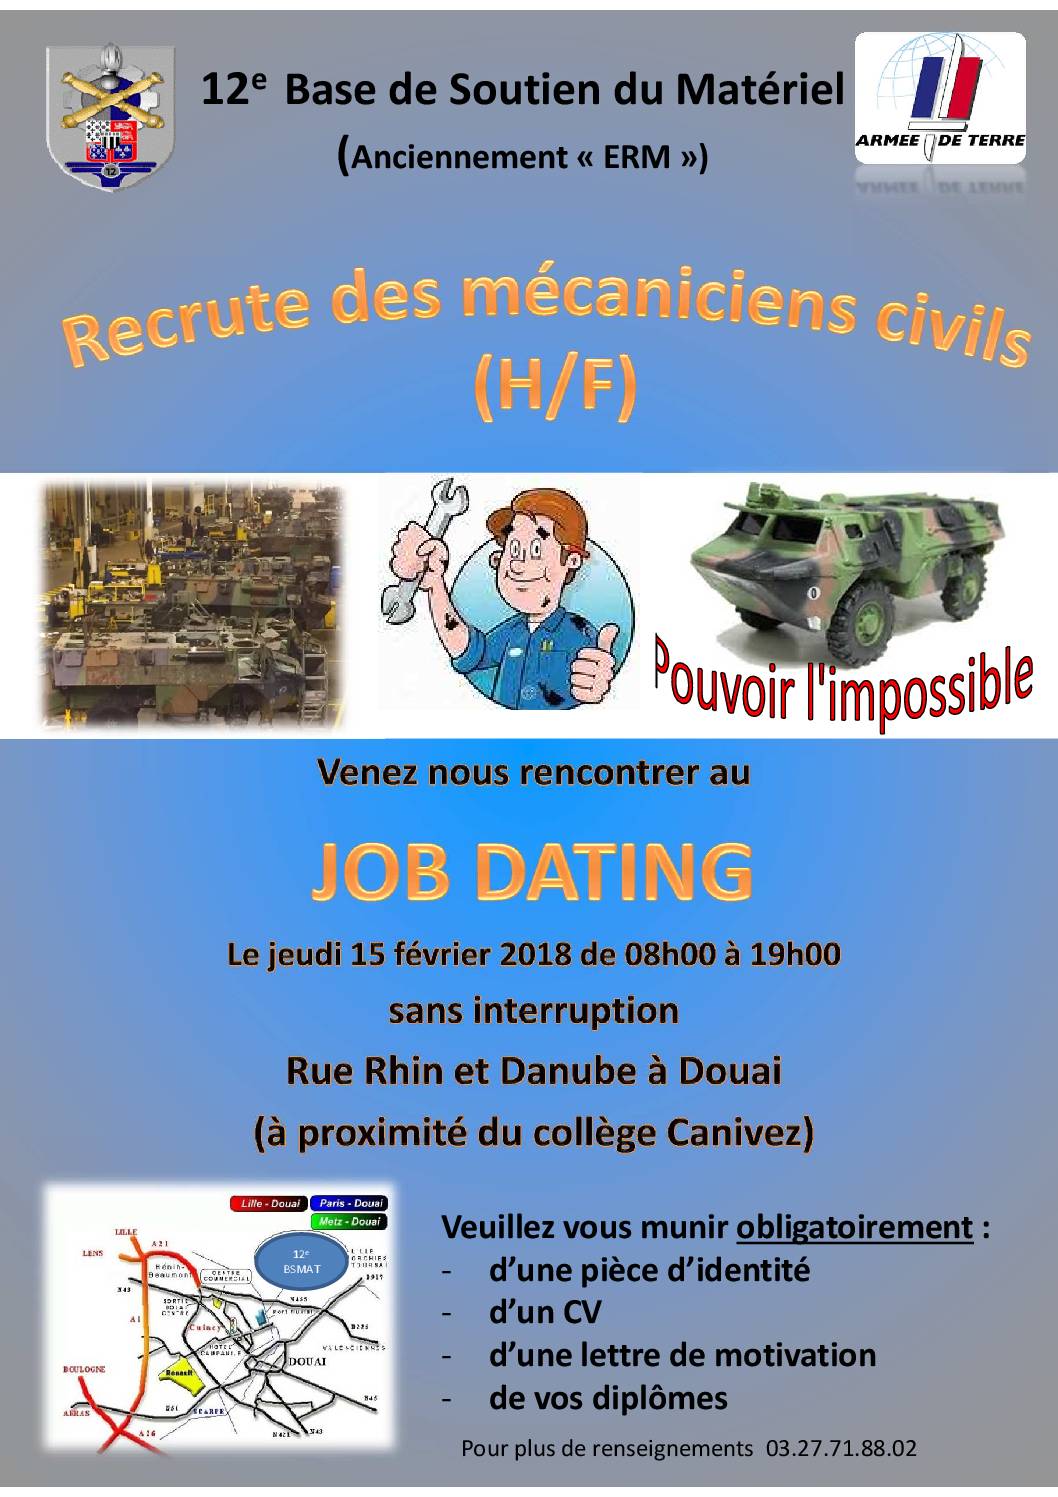 Job dating – Mécanicien civil